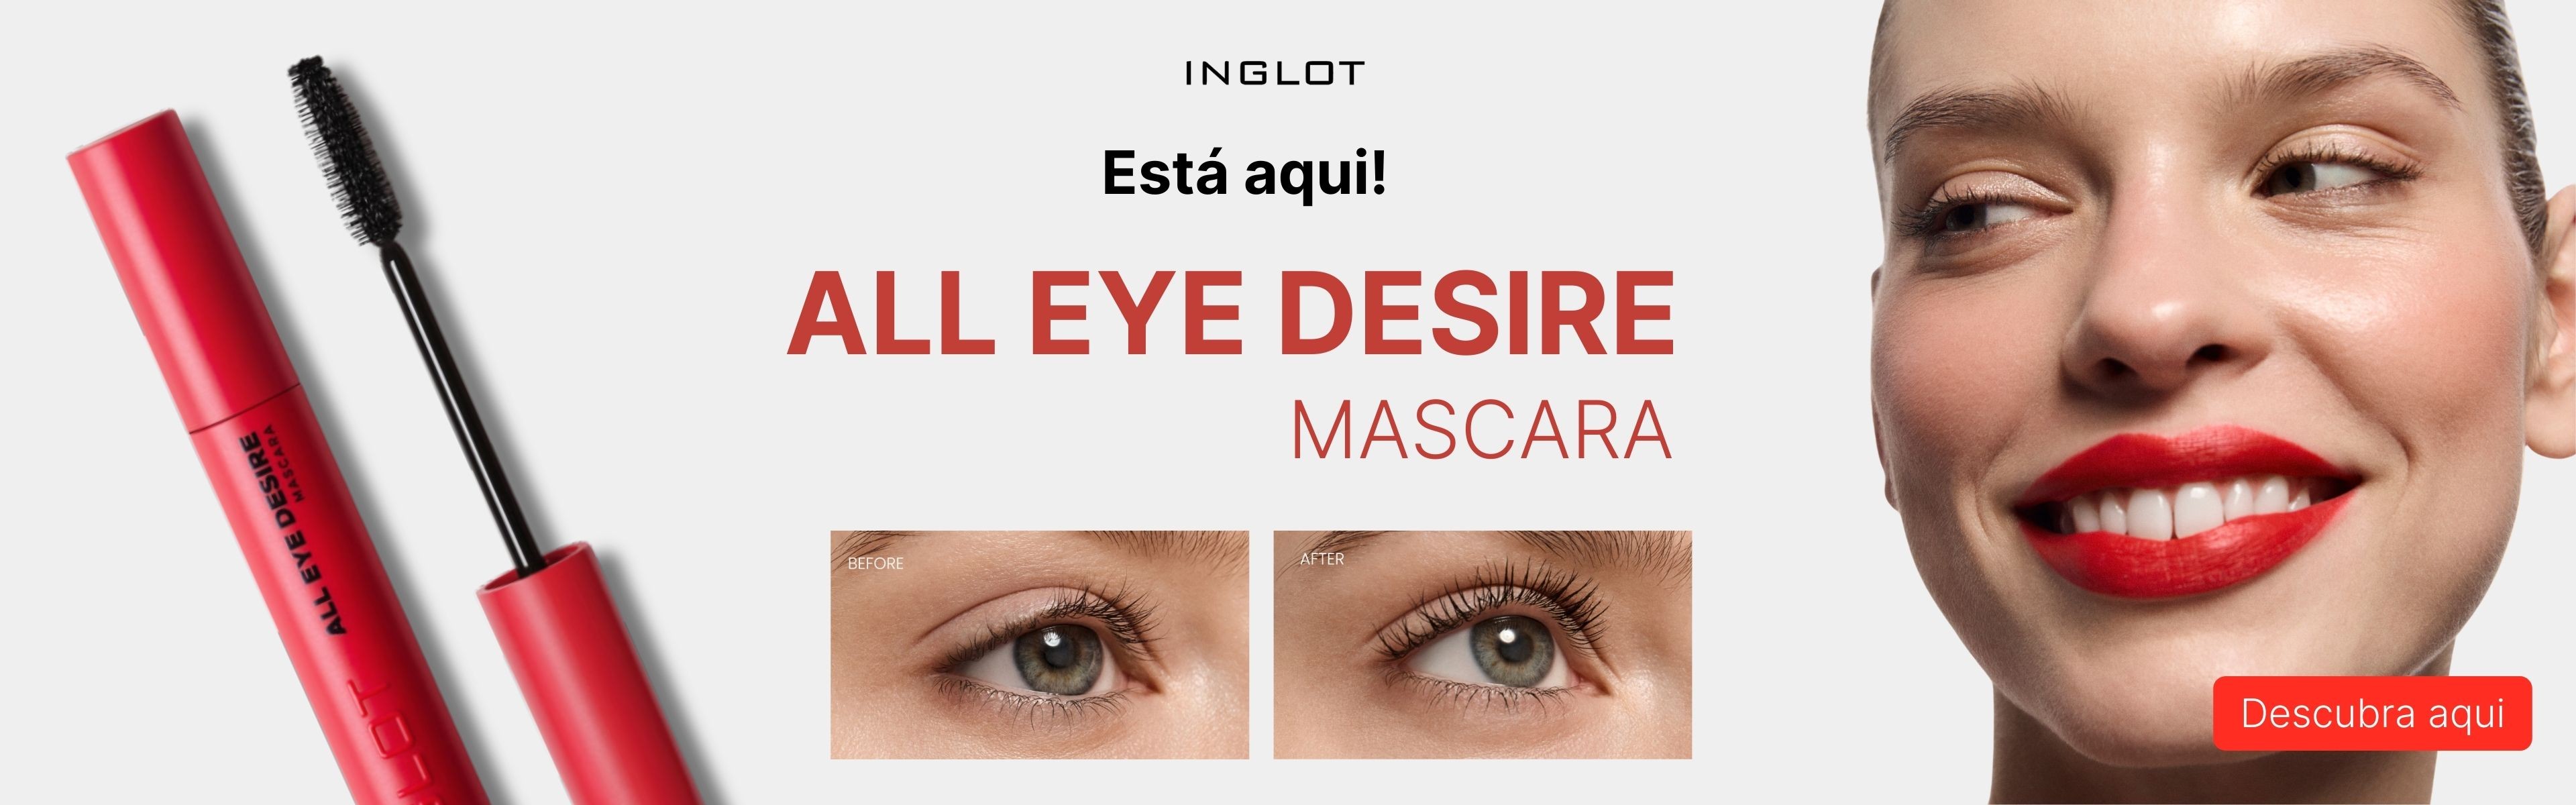 All eye desire mascara